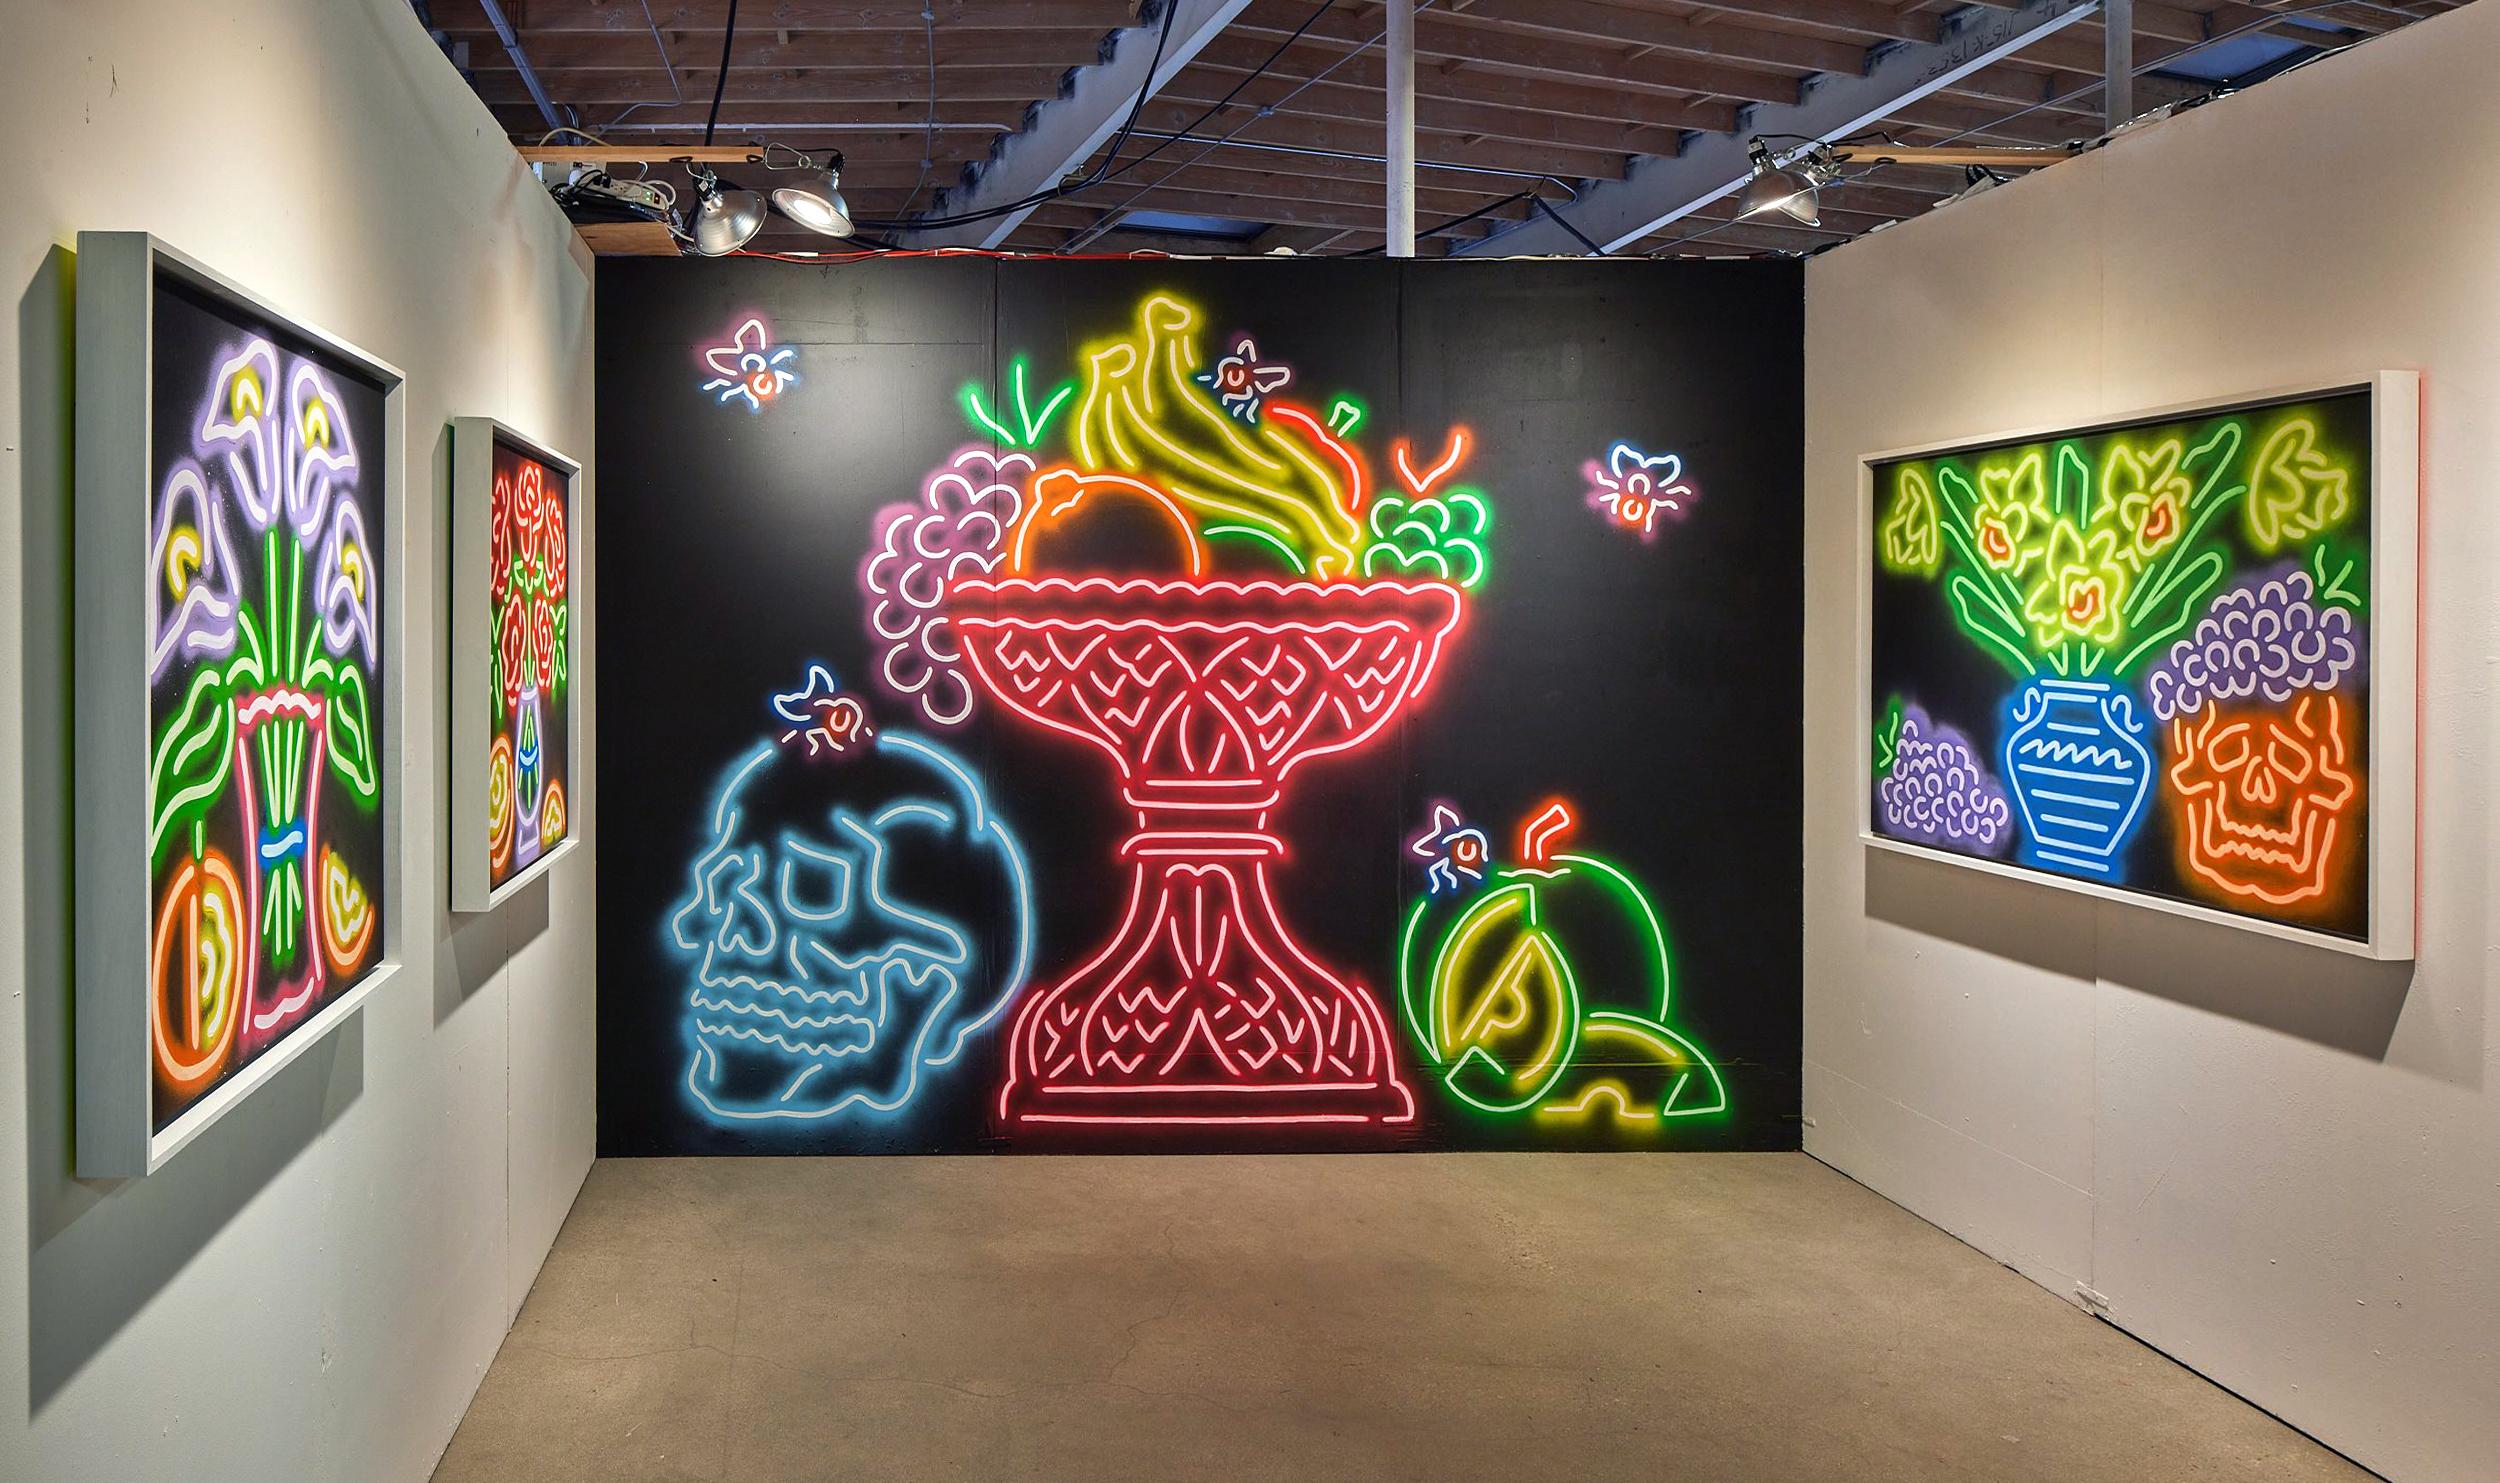 Skull, Fruit, Flies - Neon painting, Memento Mori Still-life, mural or on canvas - Contemporary Art by Jonathan Peck